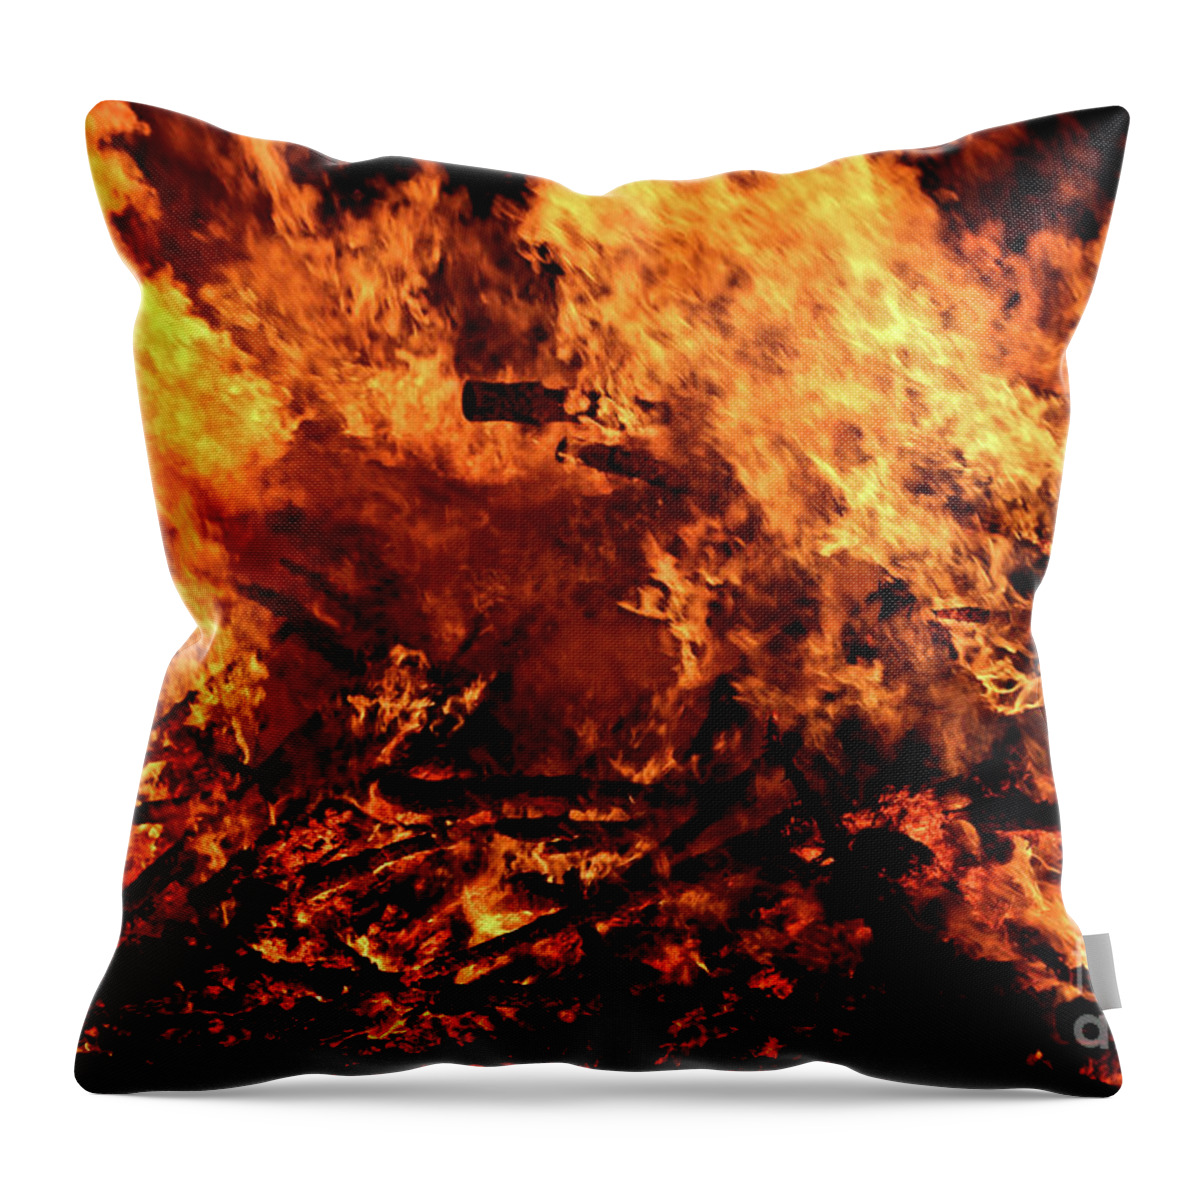 Fire Throw Pillow featuring the photograph Fire Bonfire by Vivian Krug Cotton